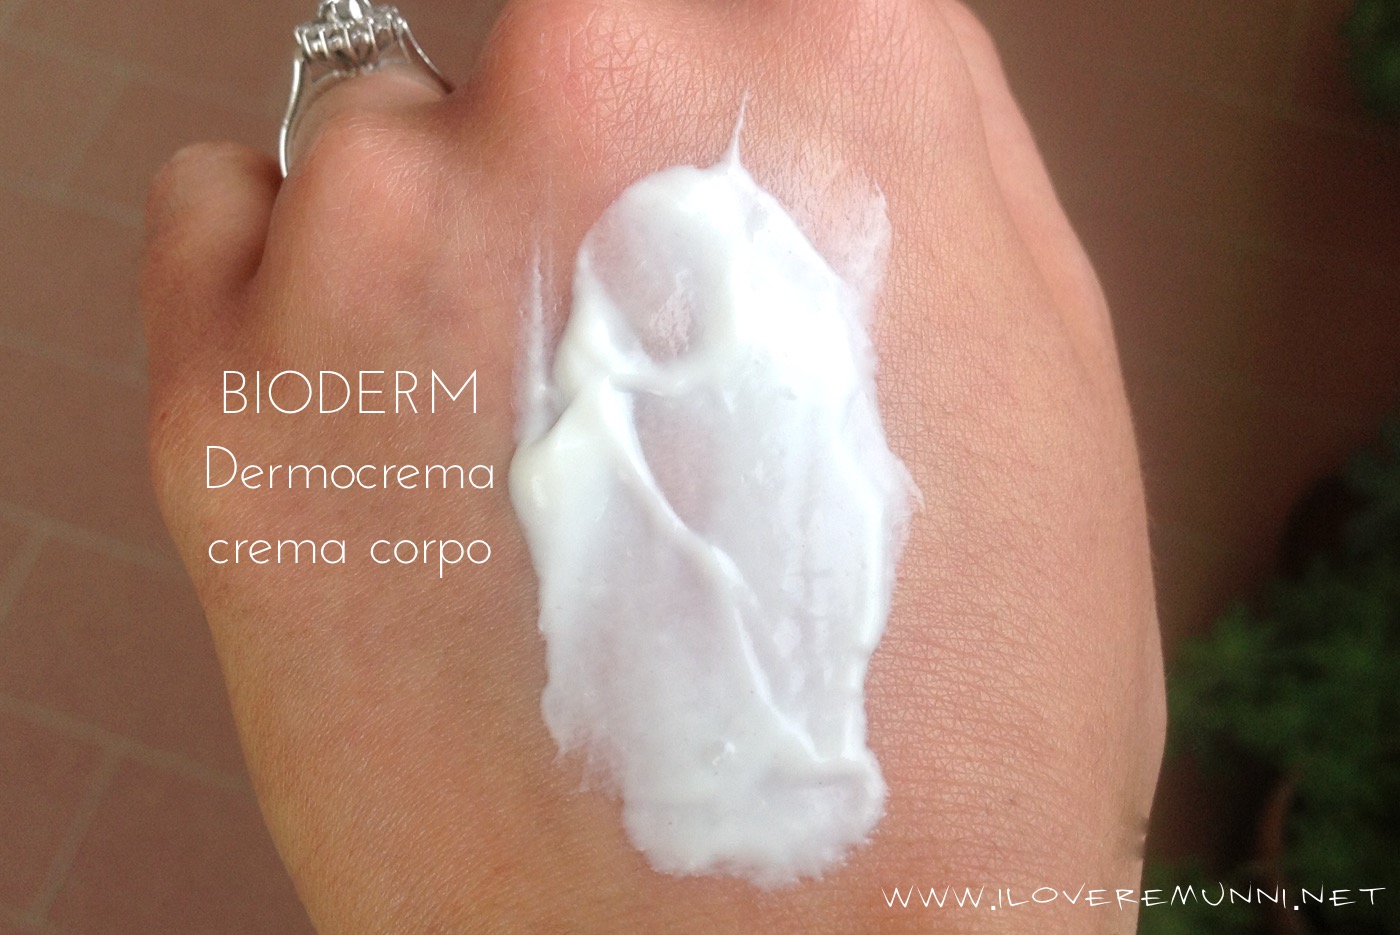 Bioderm-dermocrema-crema-recensione-opinione-inci-ingredienti